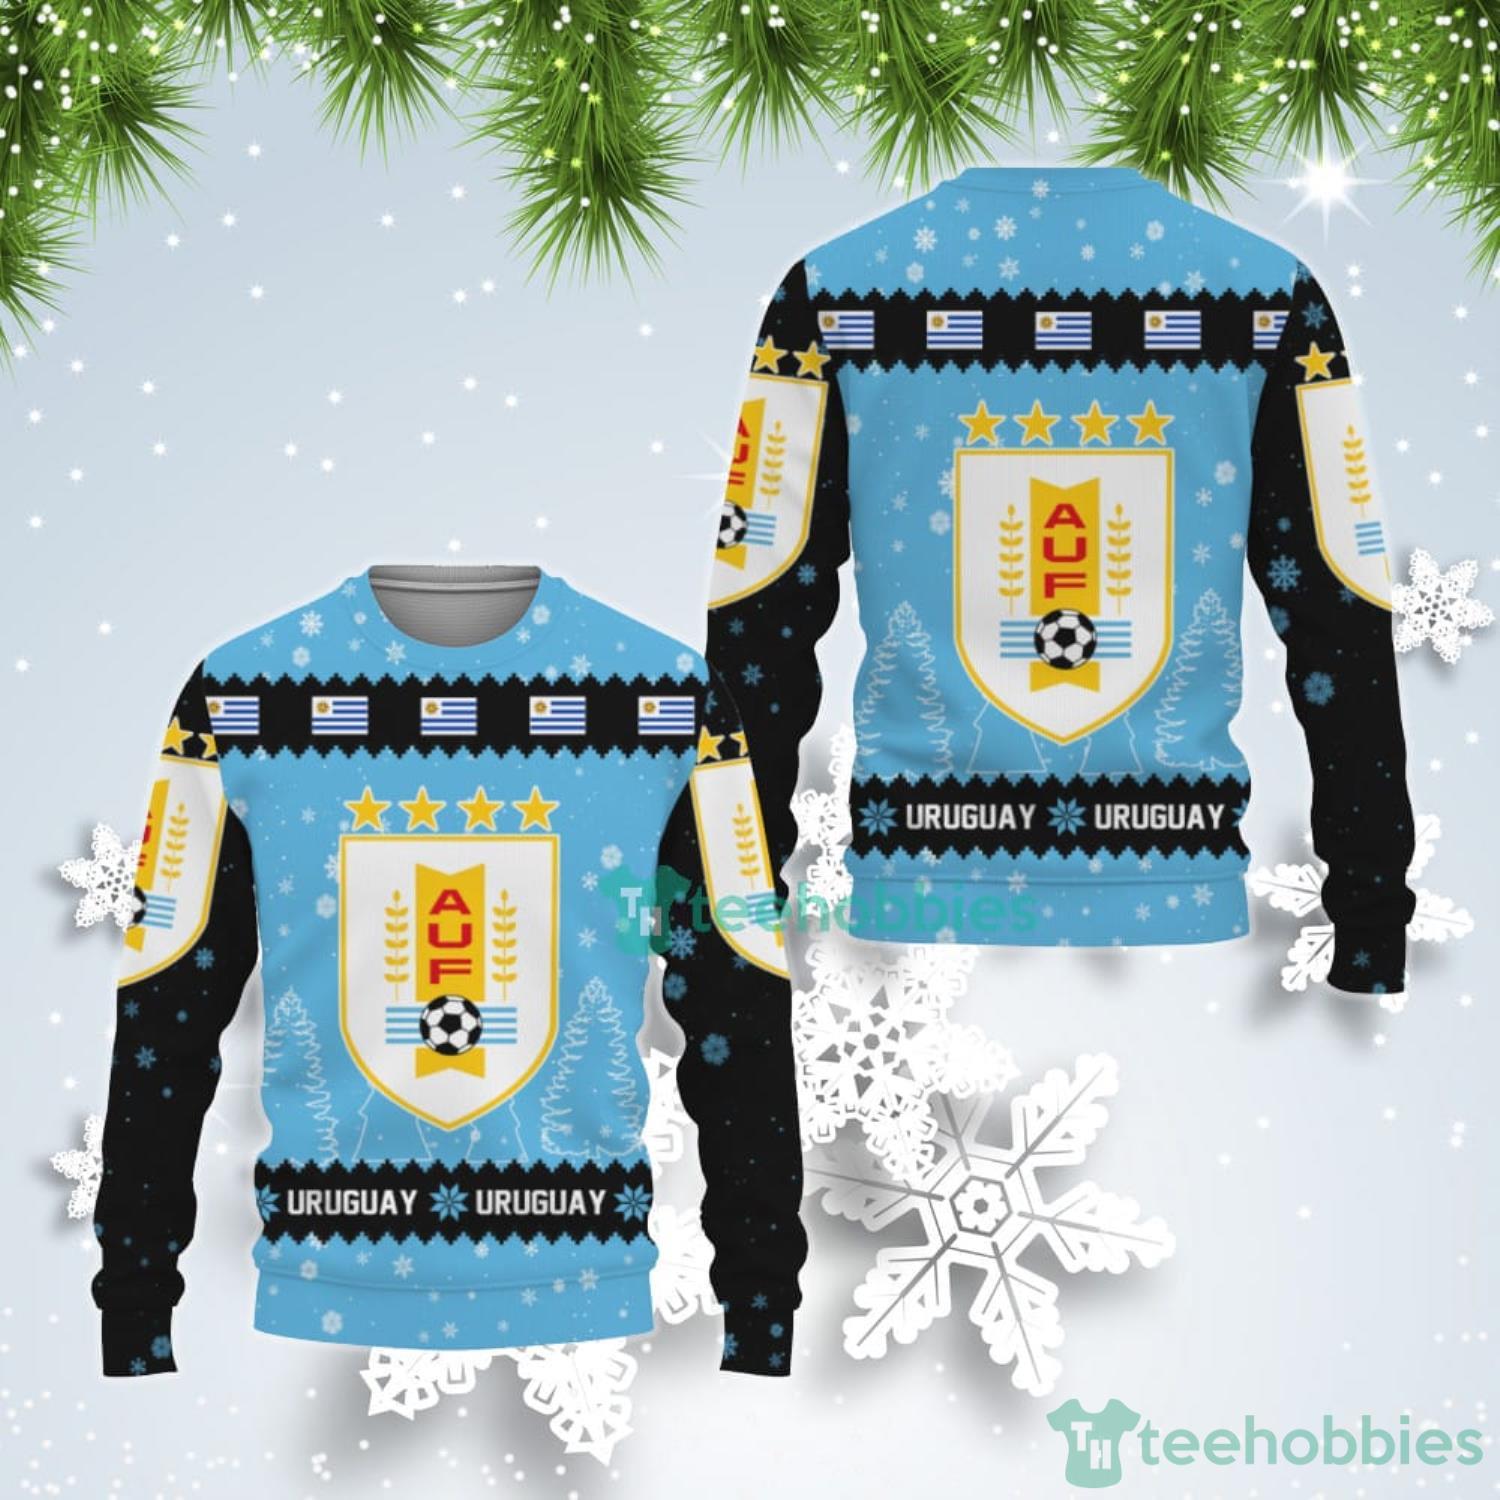 Uruguay National Soccer Team Qatar World Cup 2022 Winter Season Ugly Christmas Sweater Product Photo 1